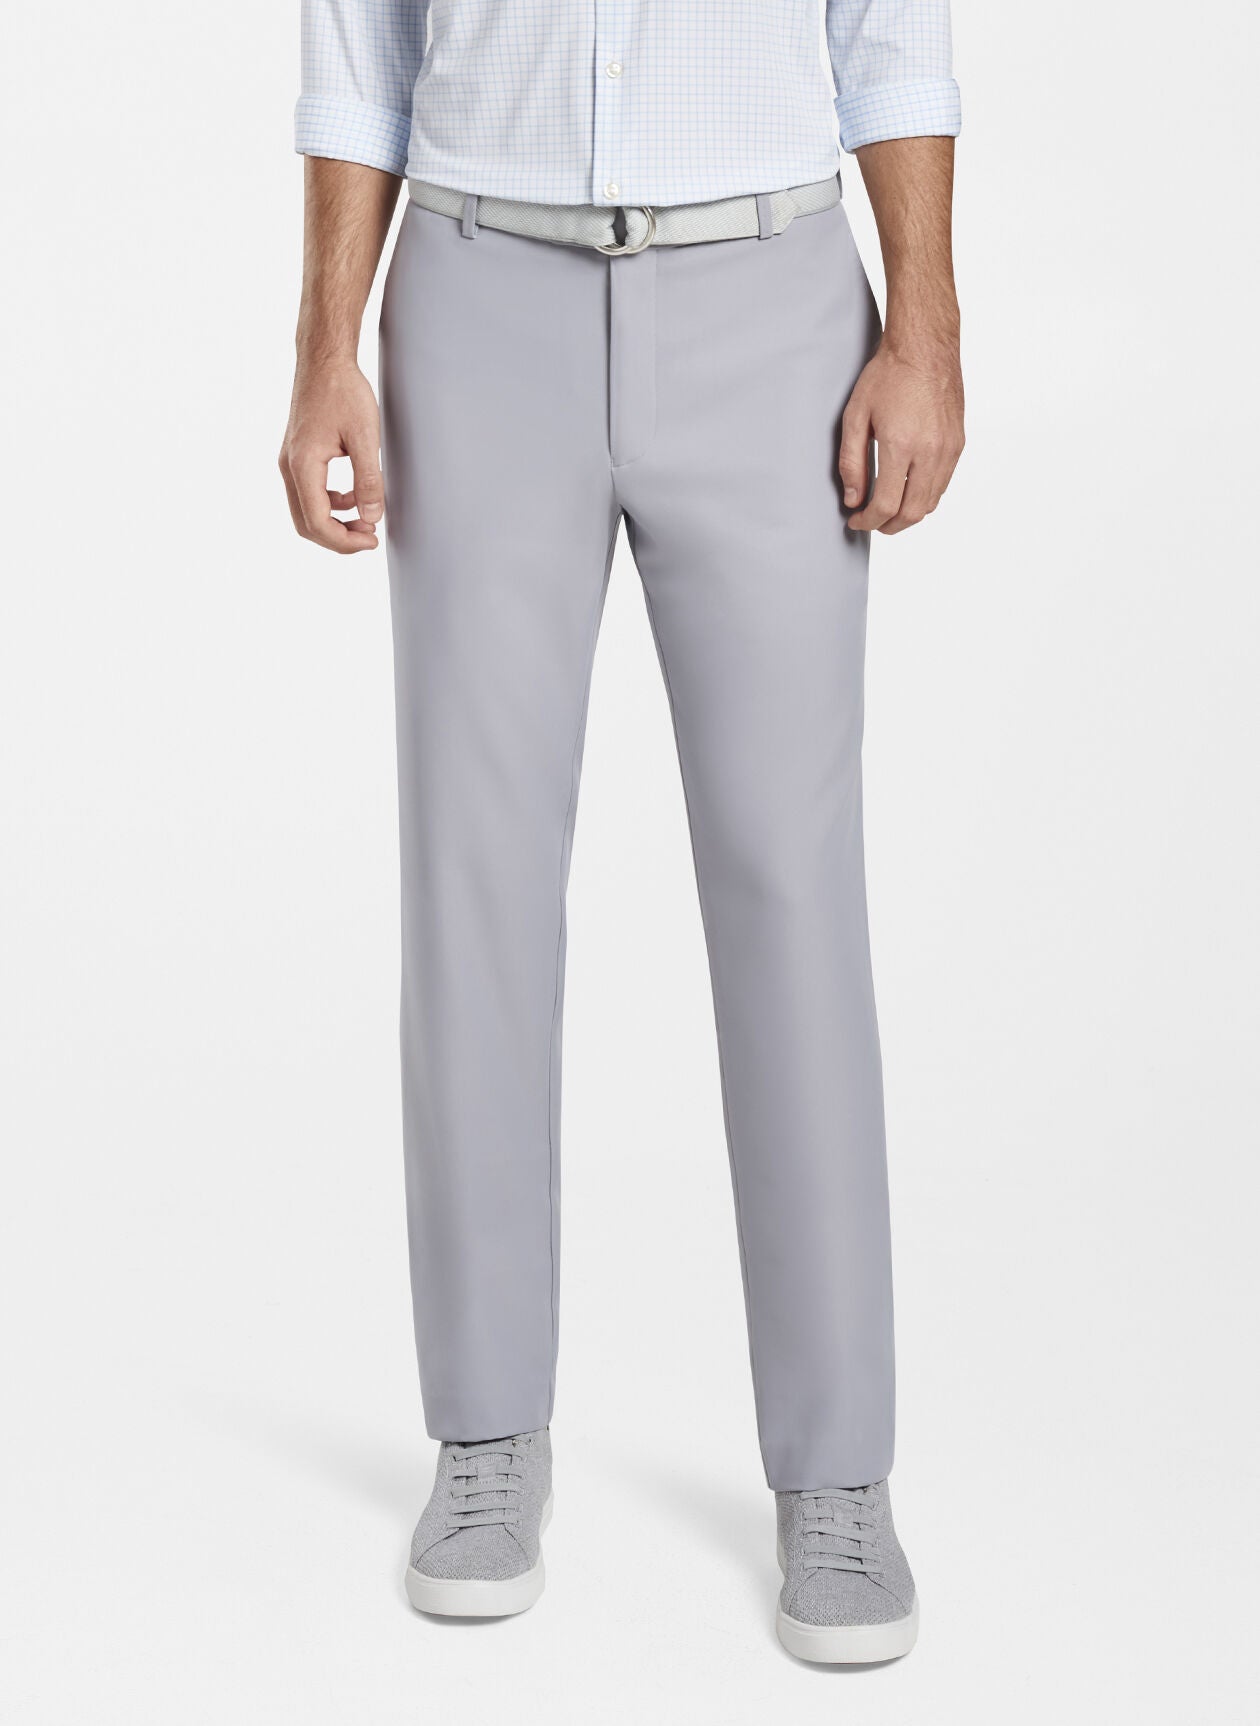 Peter Millar Golf Pants for Men for sale